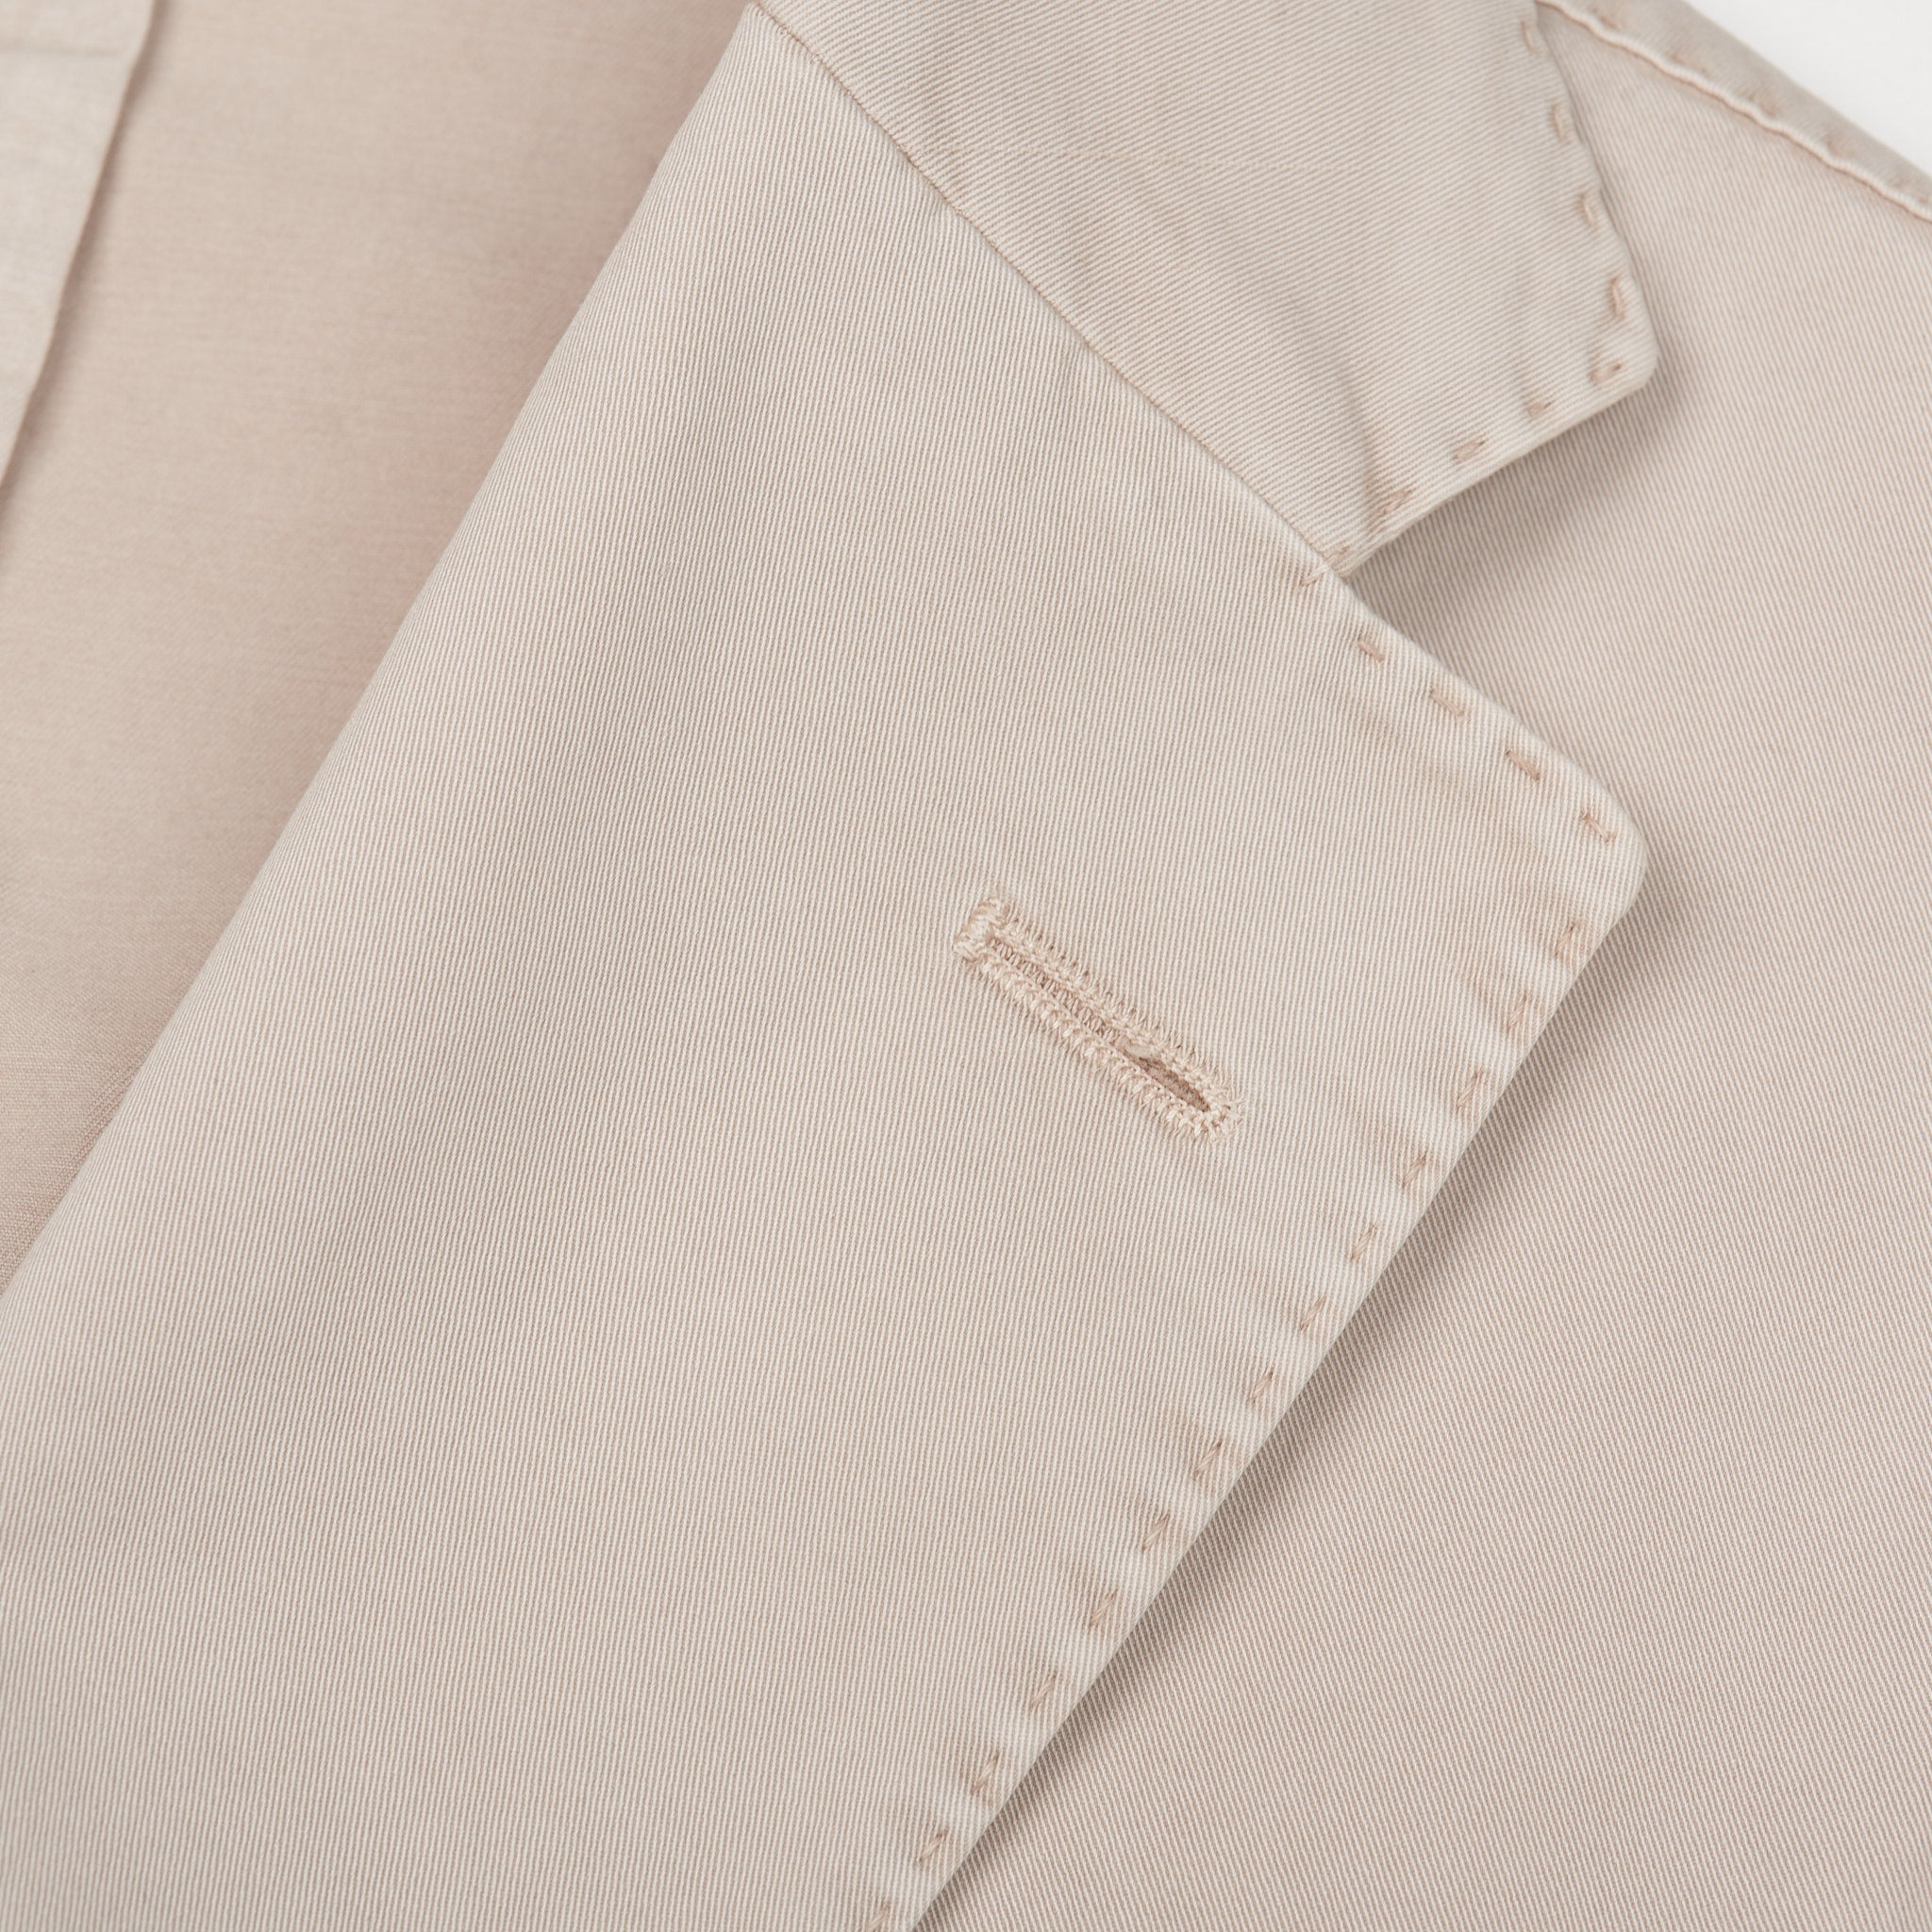 BOGLIOLI Milano "K. Jacket" Beige Twill Cotton 3 Button Unlined Suit NEW BOGLIOLI